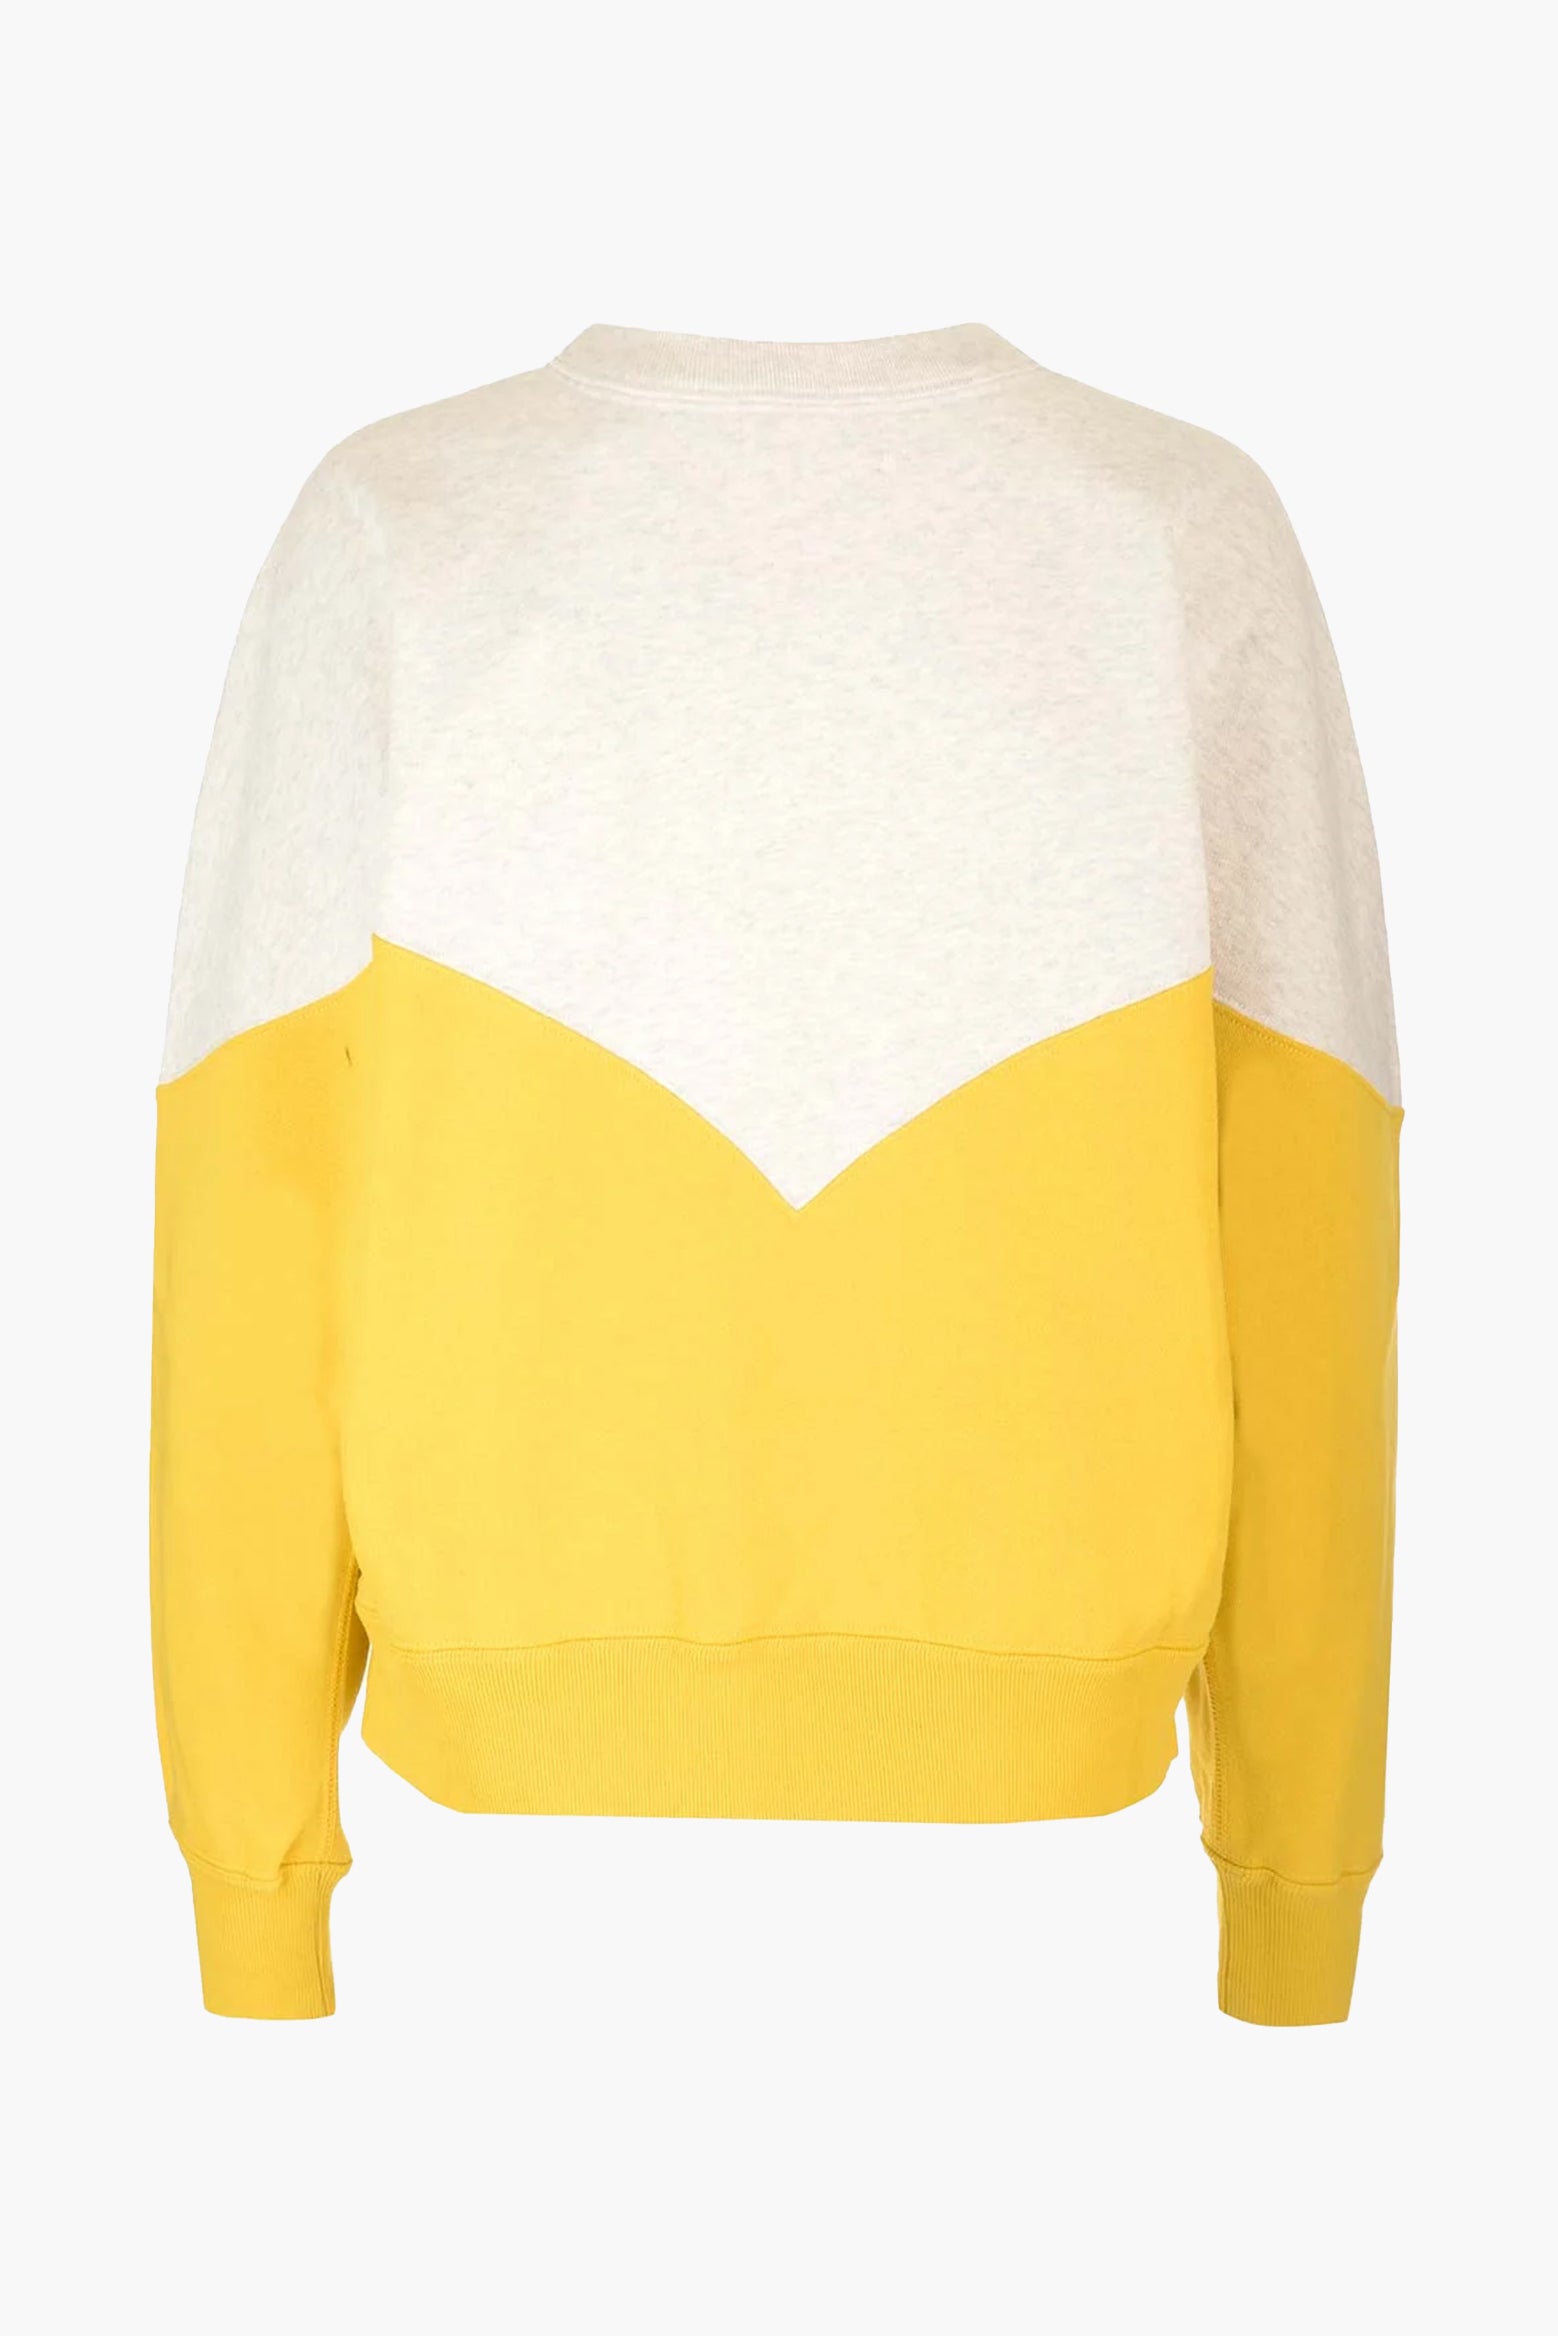 ISABEL MARANT Houston Sweatshirt in Yellow | The New Trend